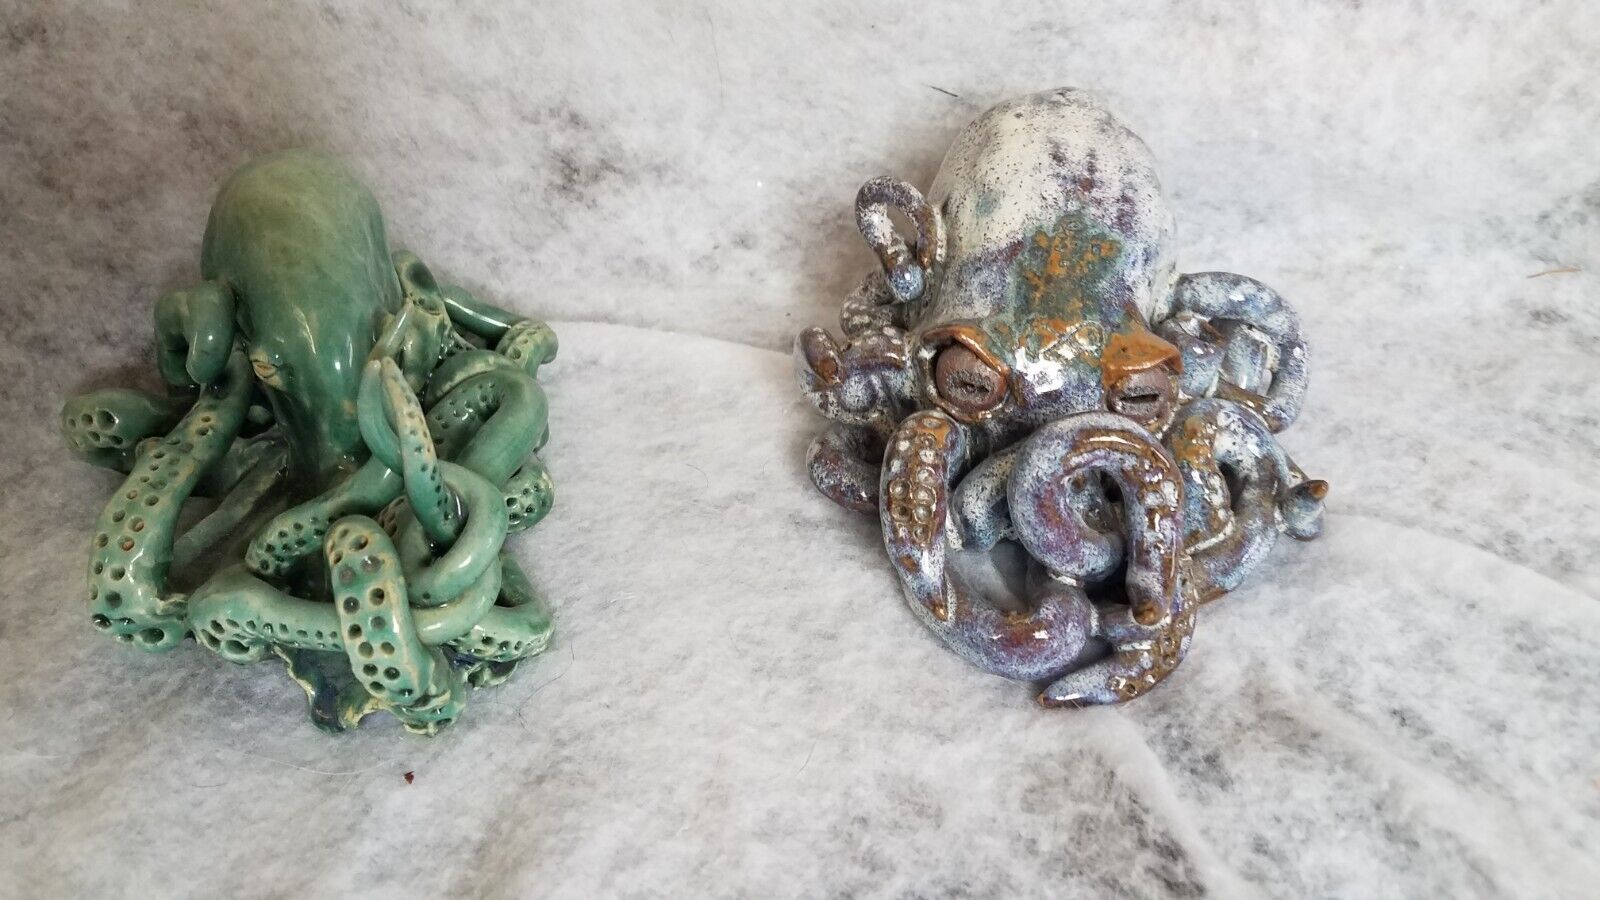 2 Vntg Homemade Ceramic Glazed Octopus Figurines Unsigned Grn. & Brn/Wht.  3...